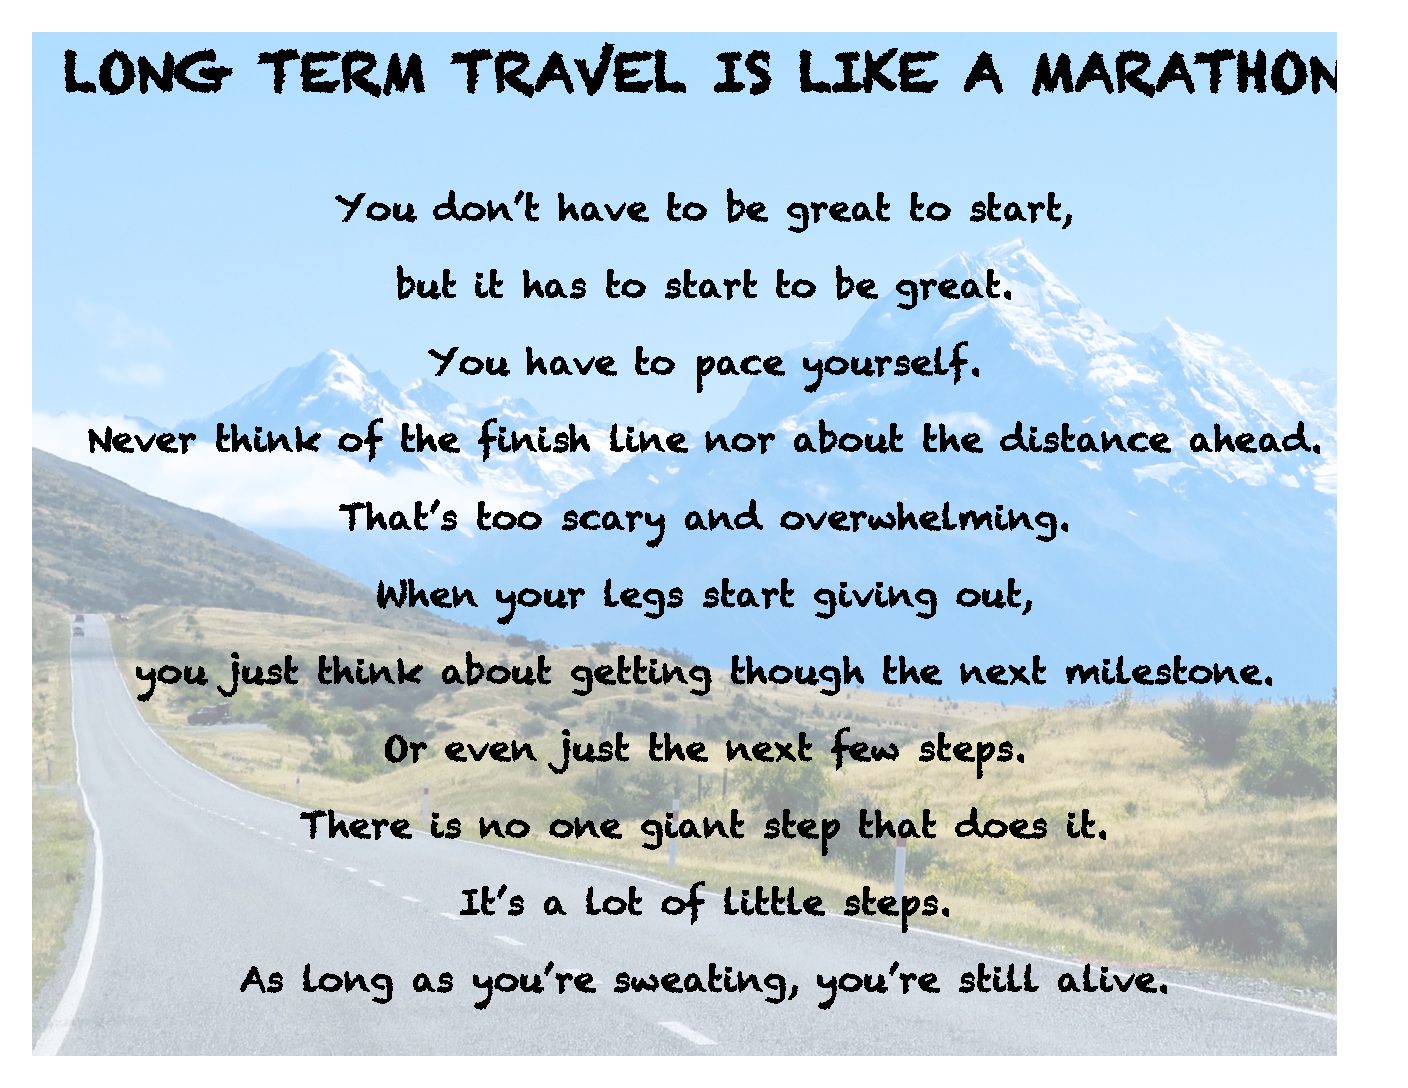 Travel is like a marathon